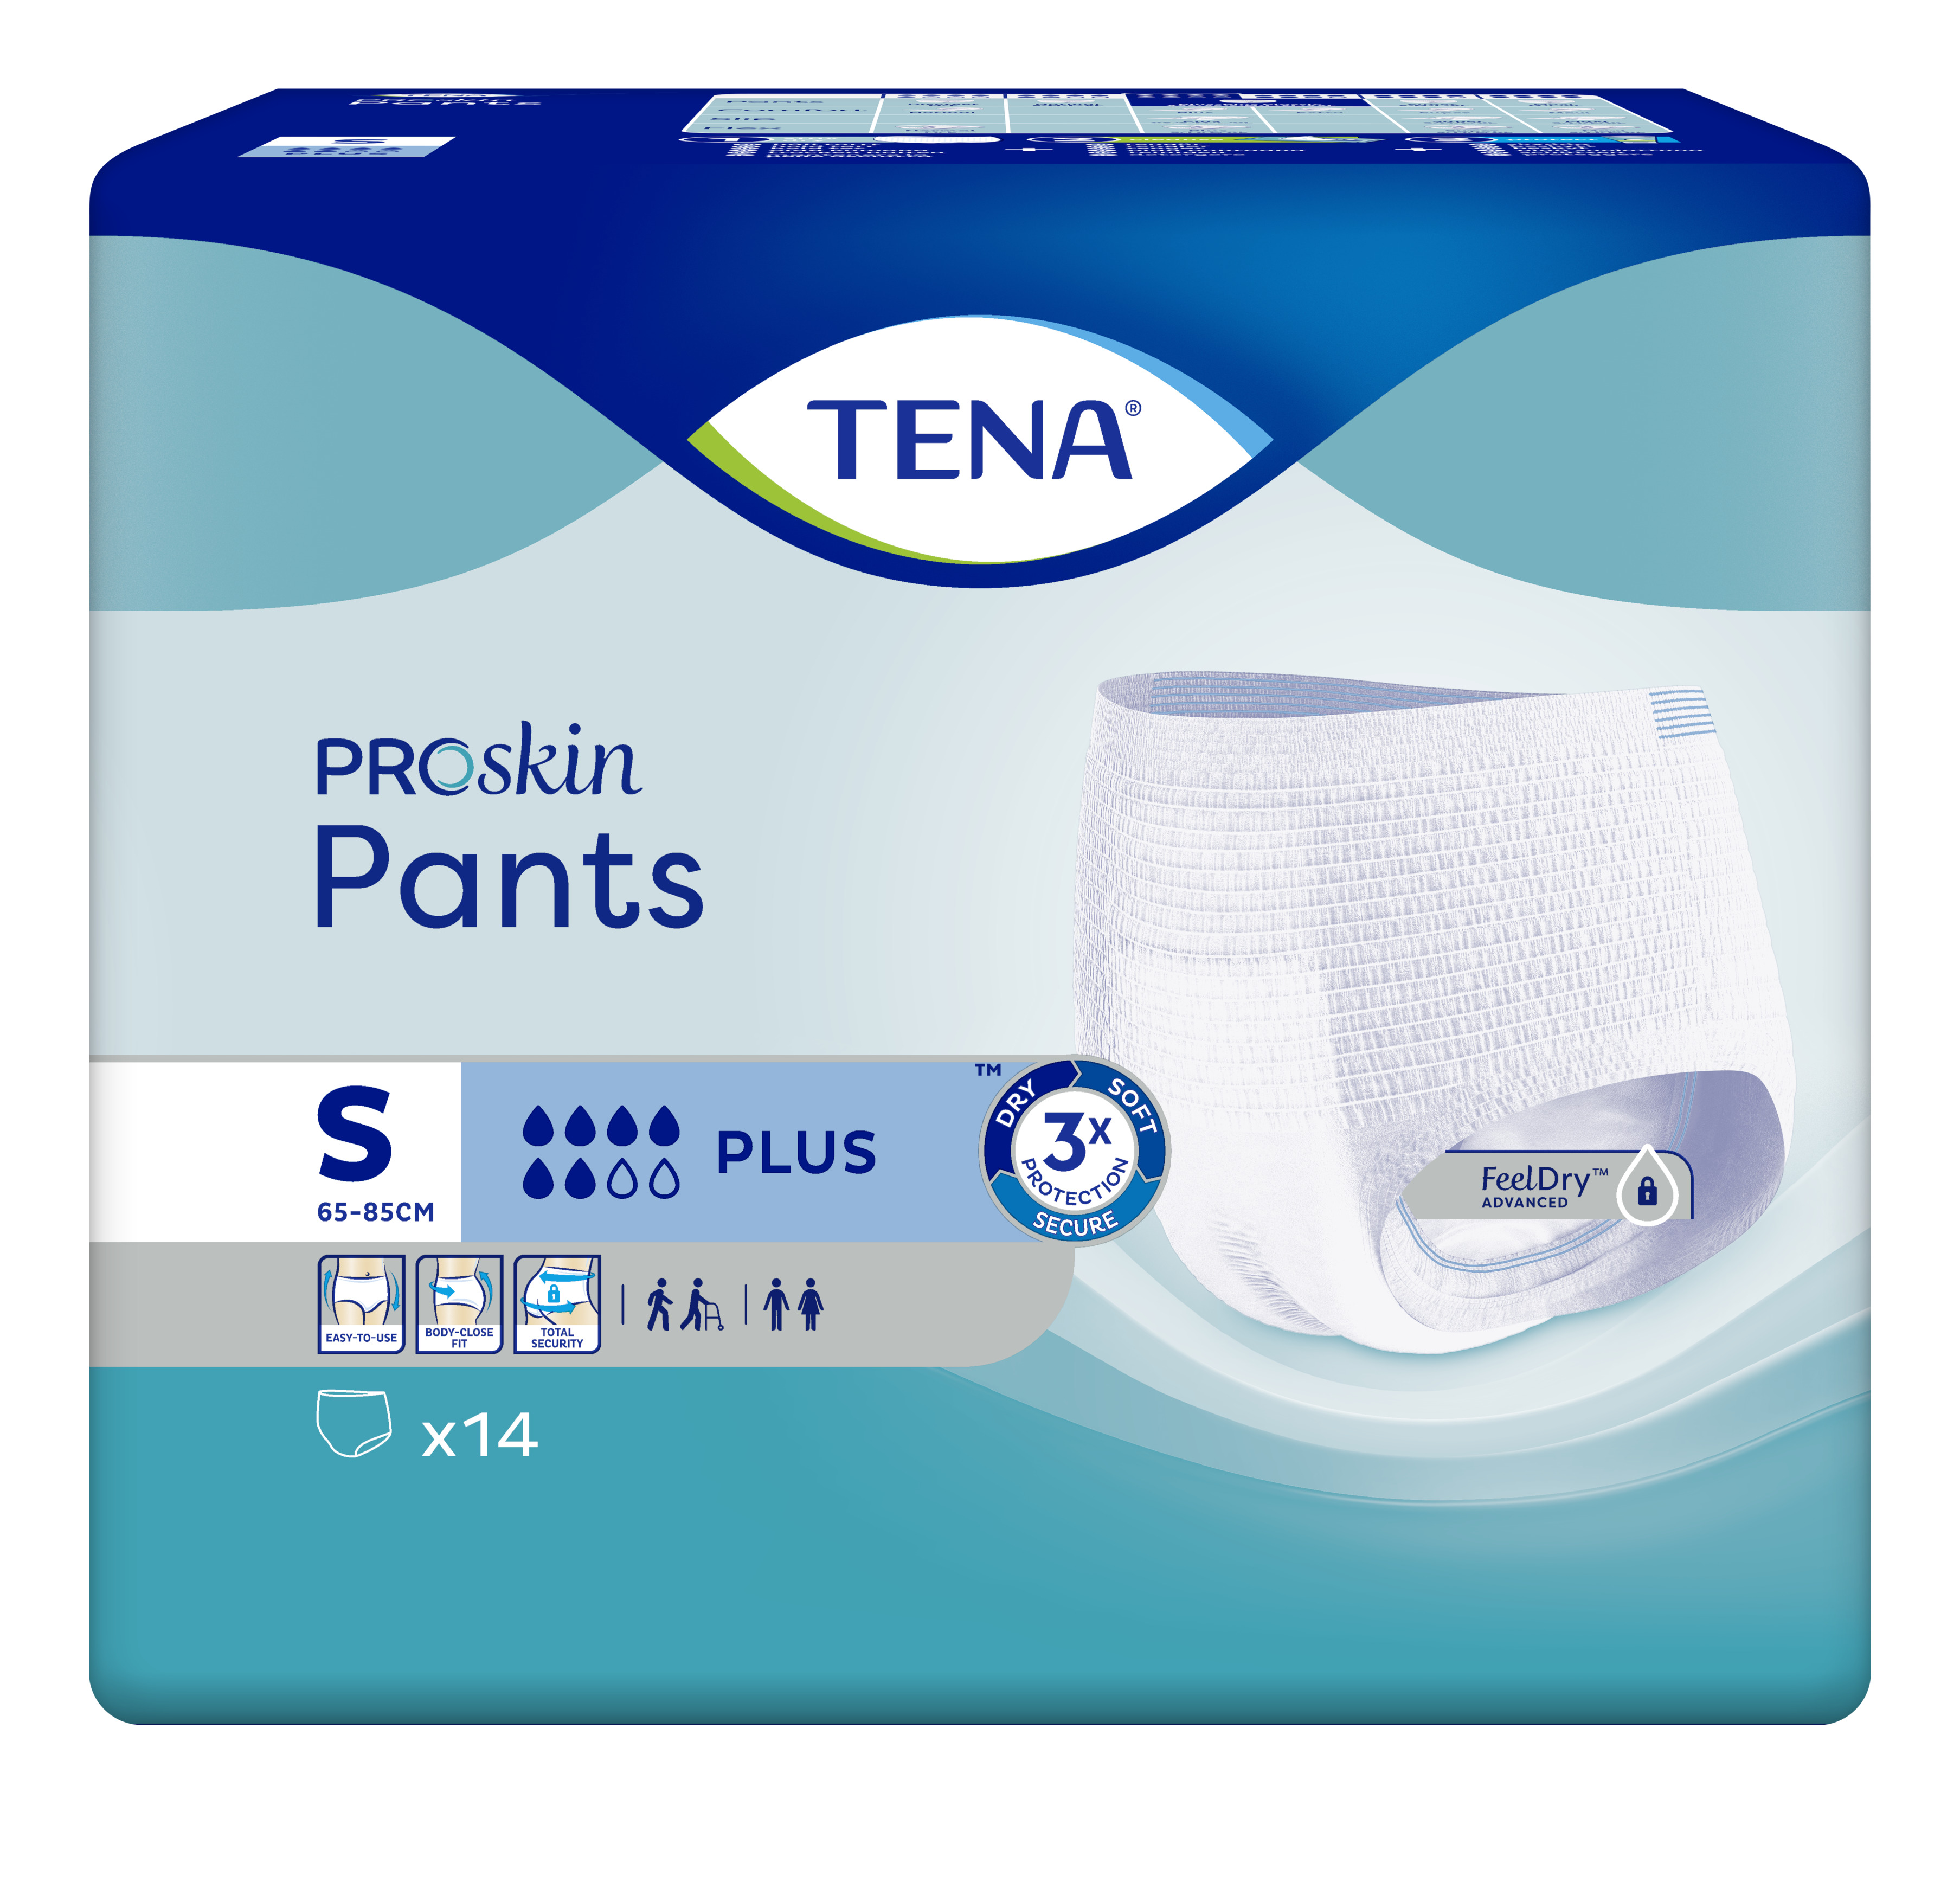 TENA PROskin Pants Plus Small image 0